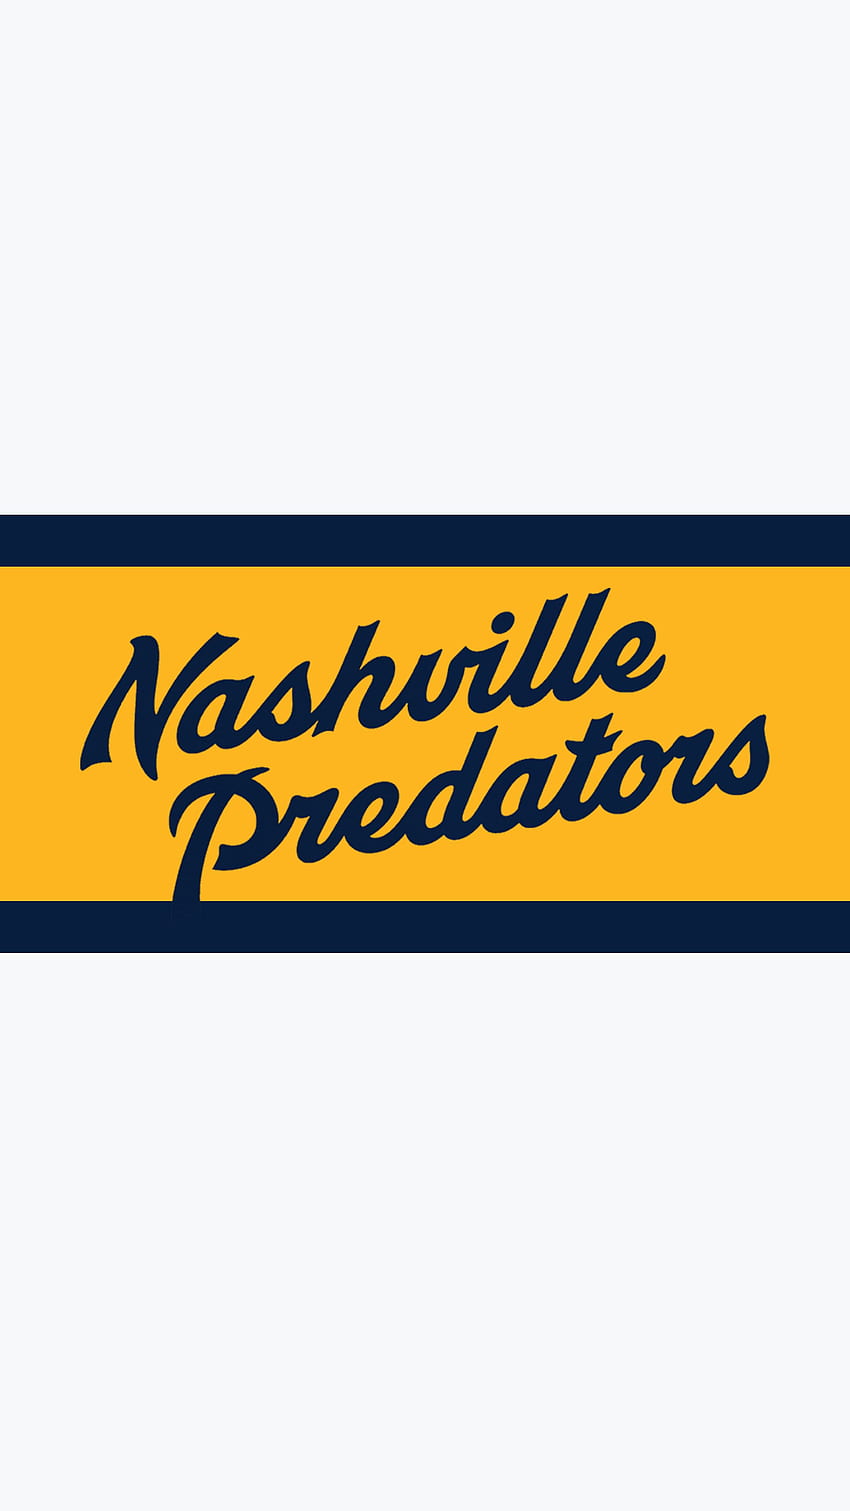 Nashville Predators on X: Winter Classic #WallpaperWednesday